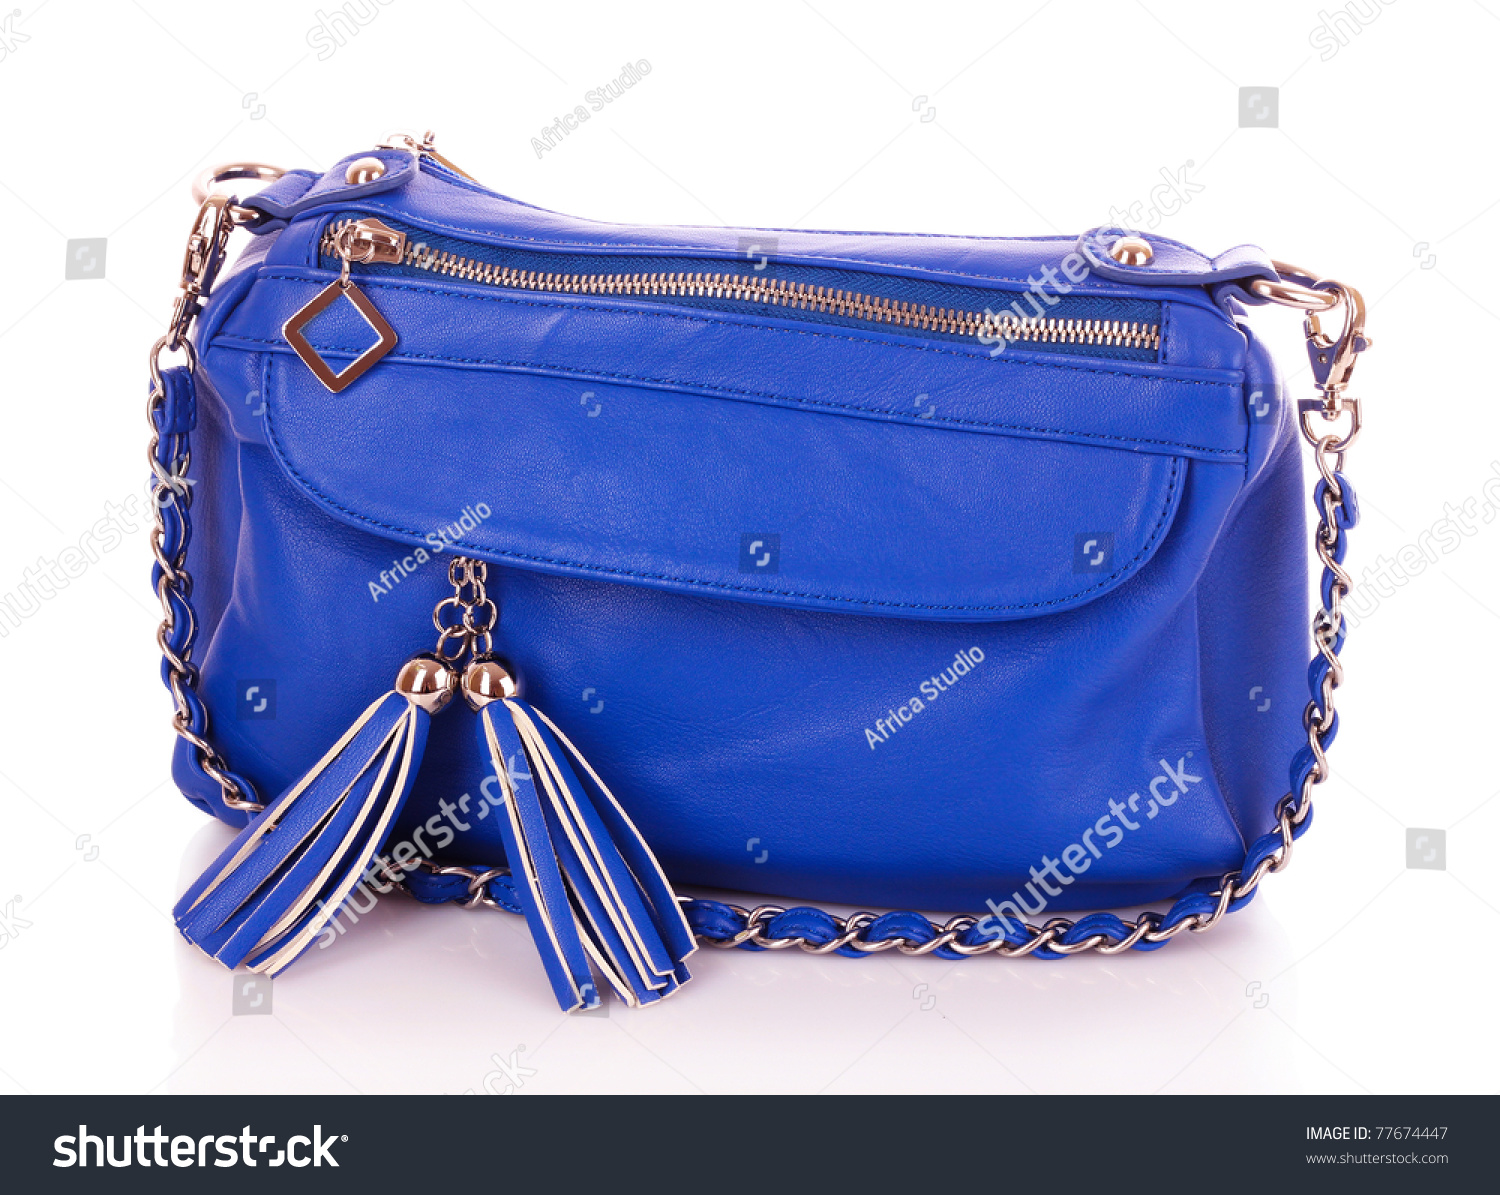 Blue Women Bag Isolated On White Background Stock Photo 77674447 ...